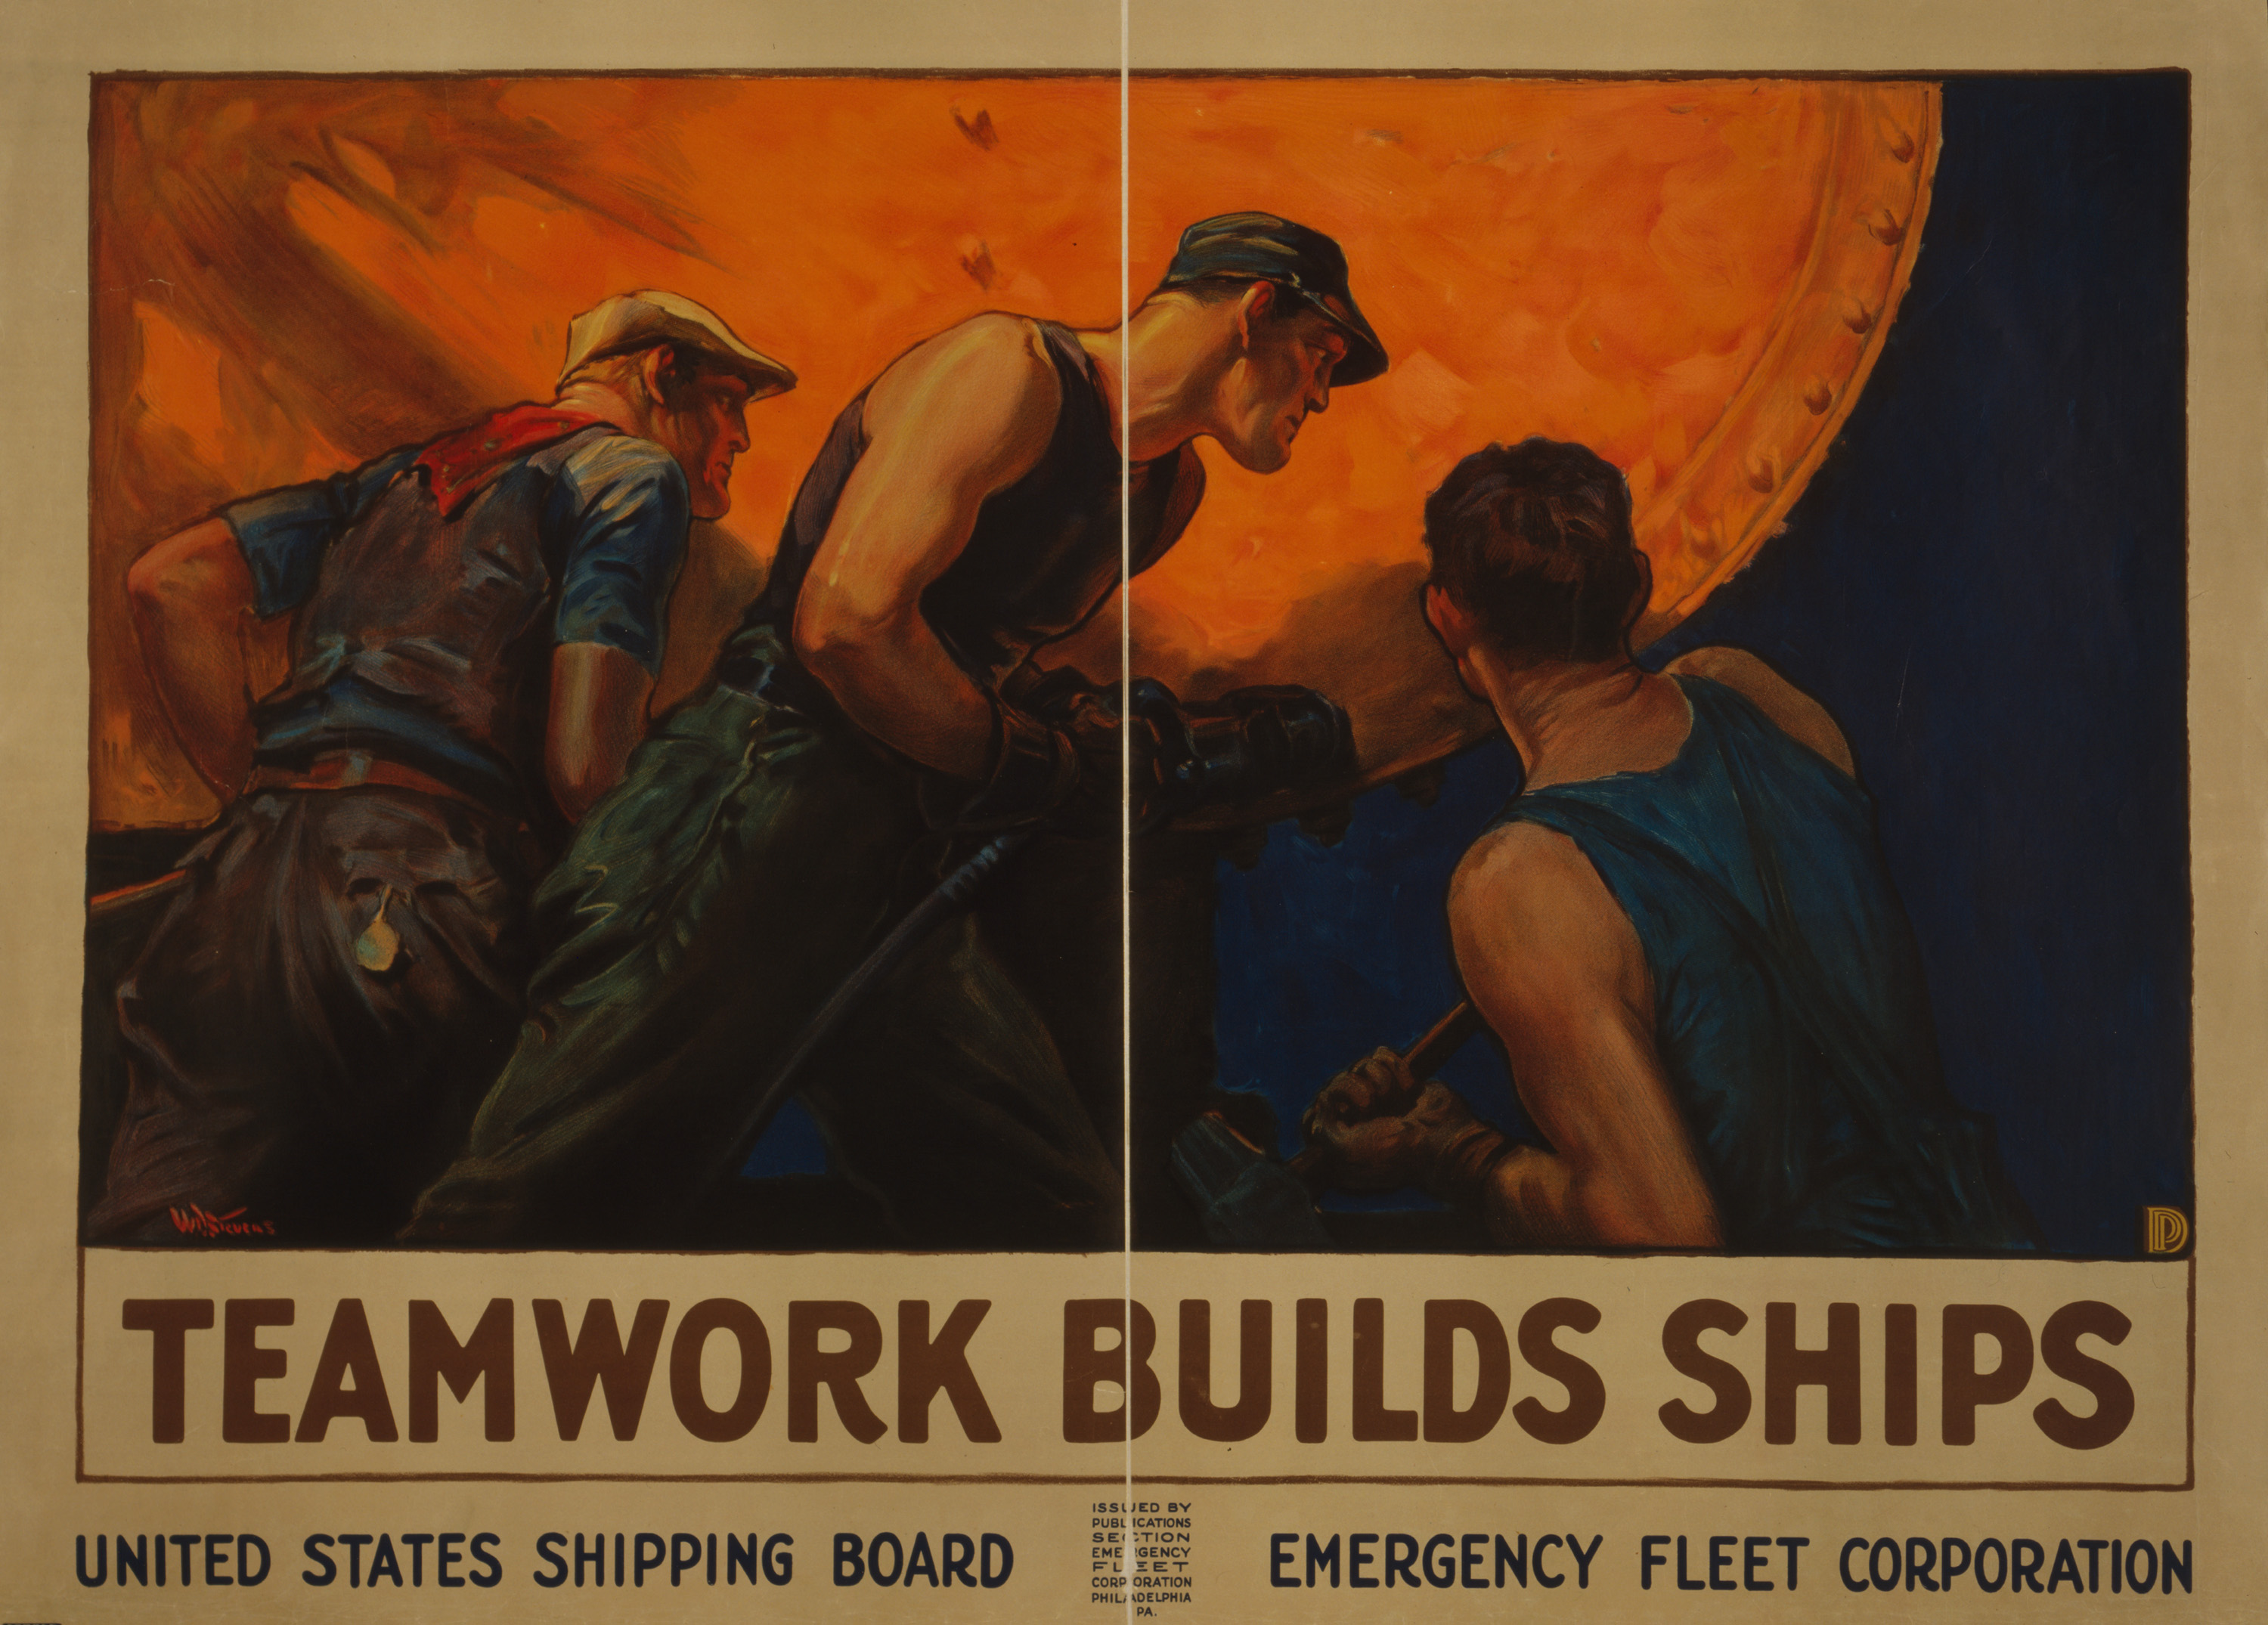 "Teamwork Builds Ships. United States Shipping Board, Emergency Fleet Corporation."